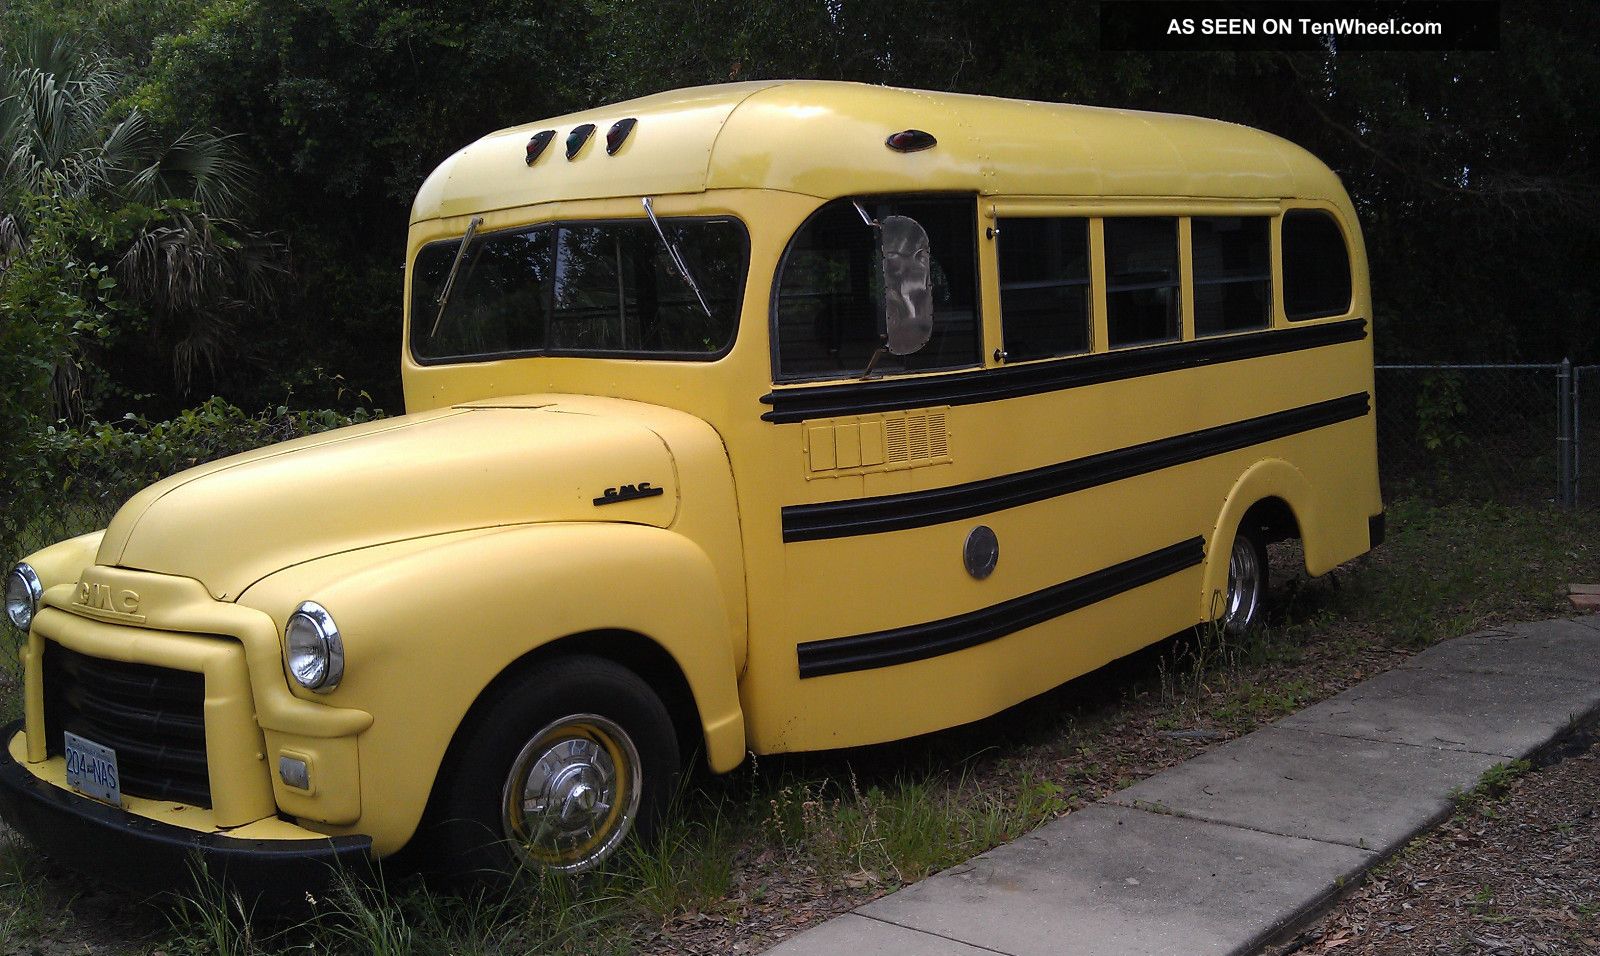 1953 Gmc school bus for sale